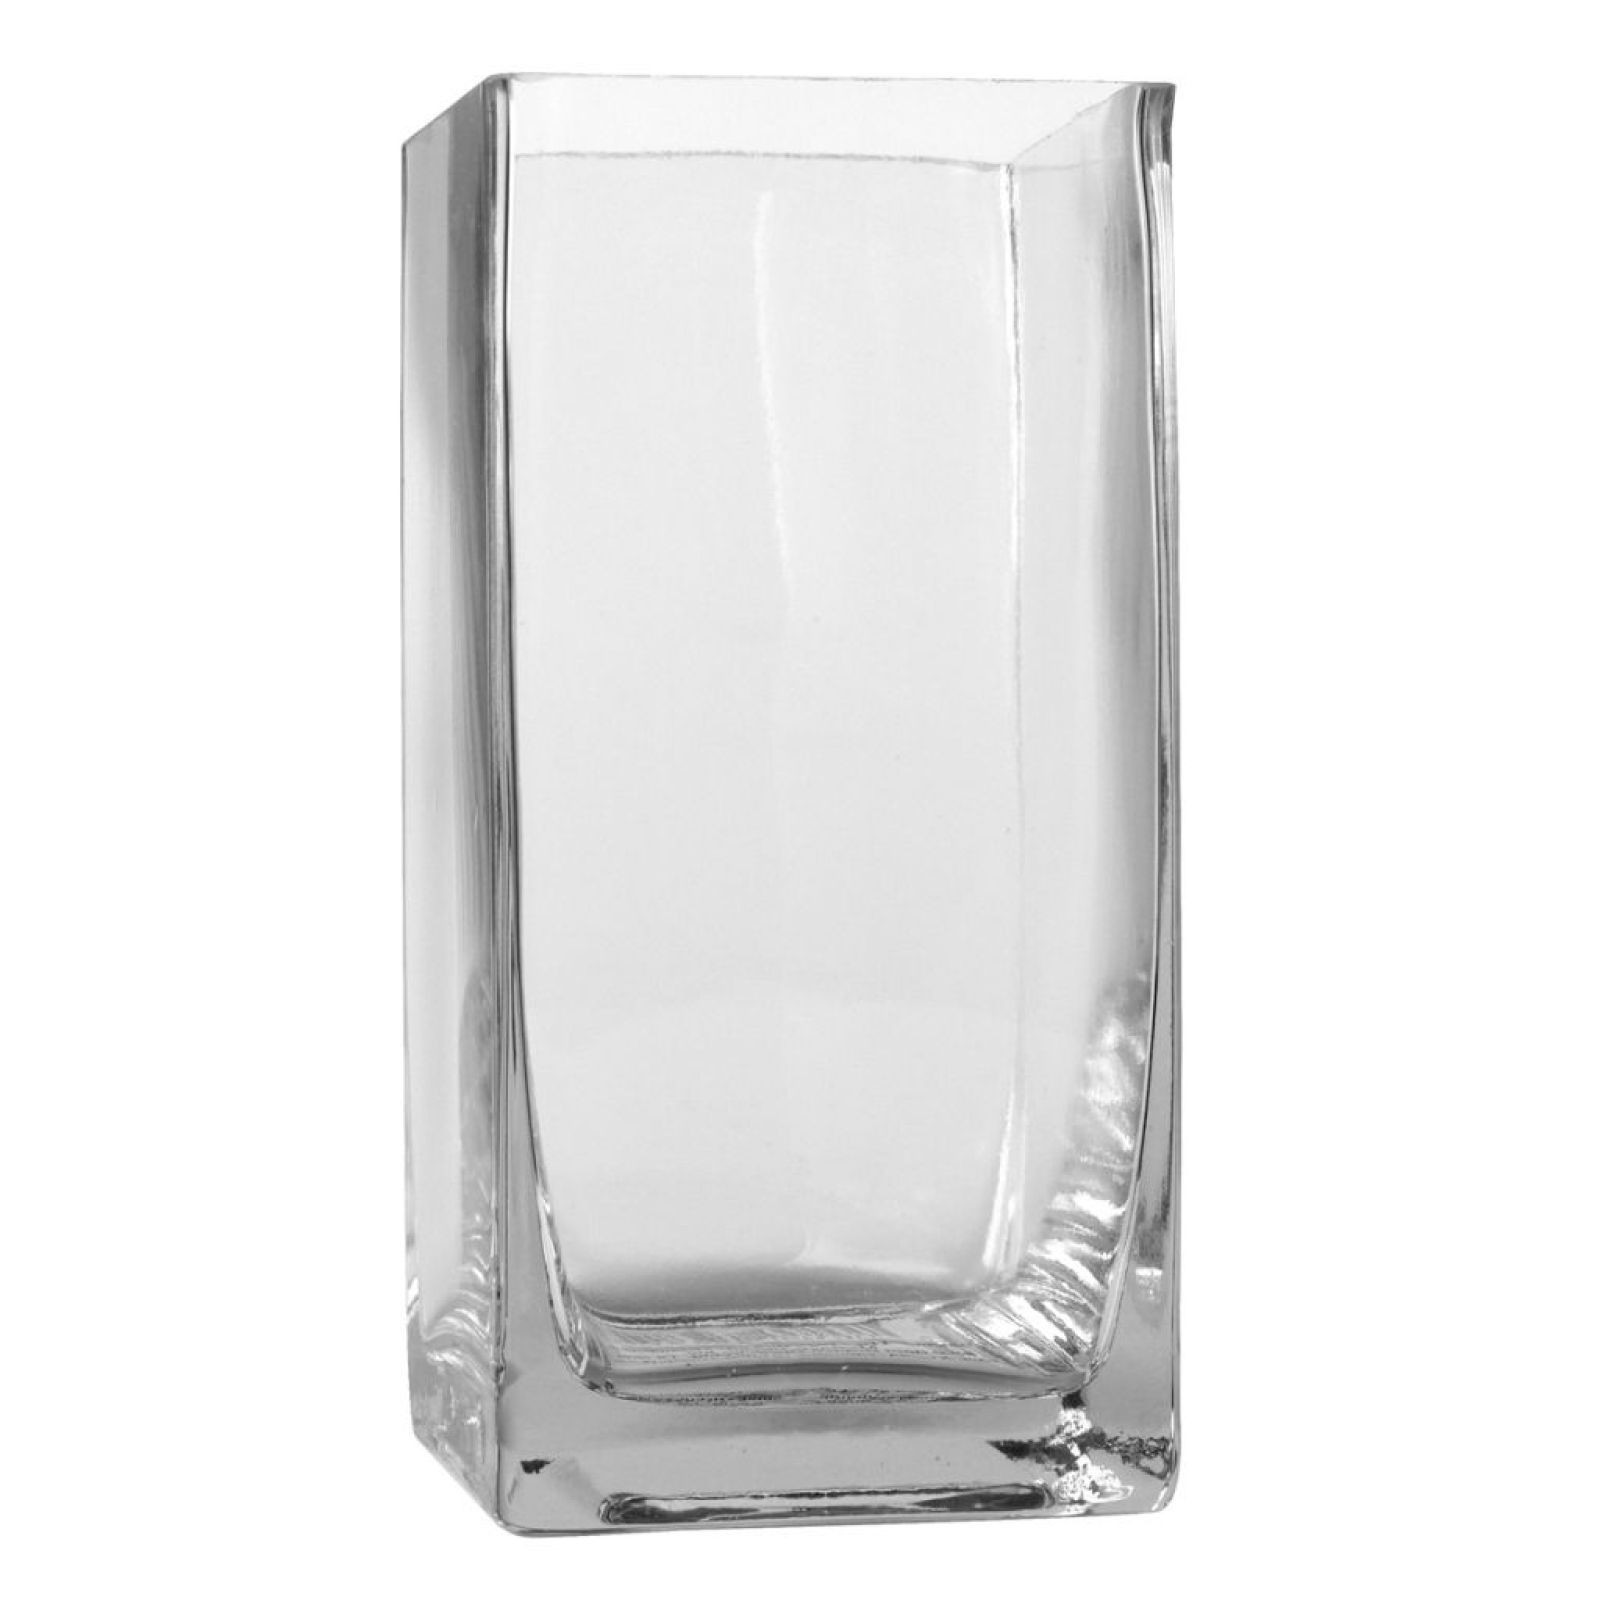 29 Stunning 8 Inch Square Glass Vase 2024 free download 8 inch square glass vase of ashland tall cube glass vase cube and glass within ashlanda tall cube glass vase 6